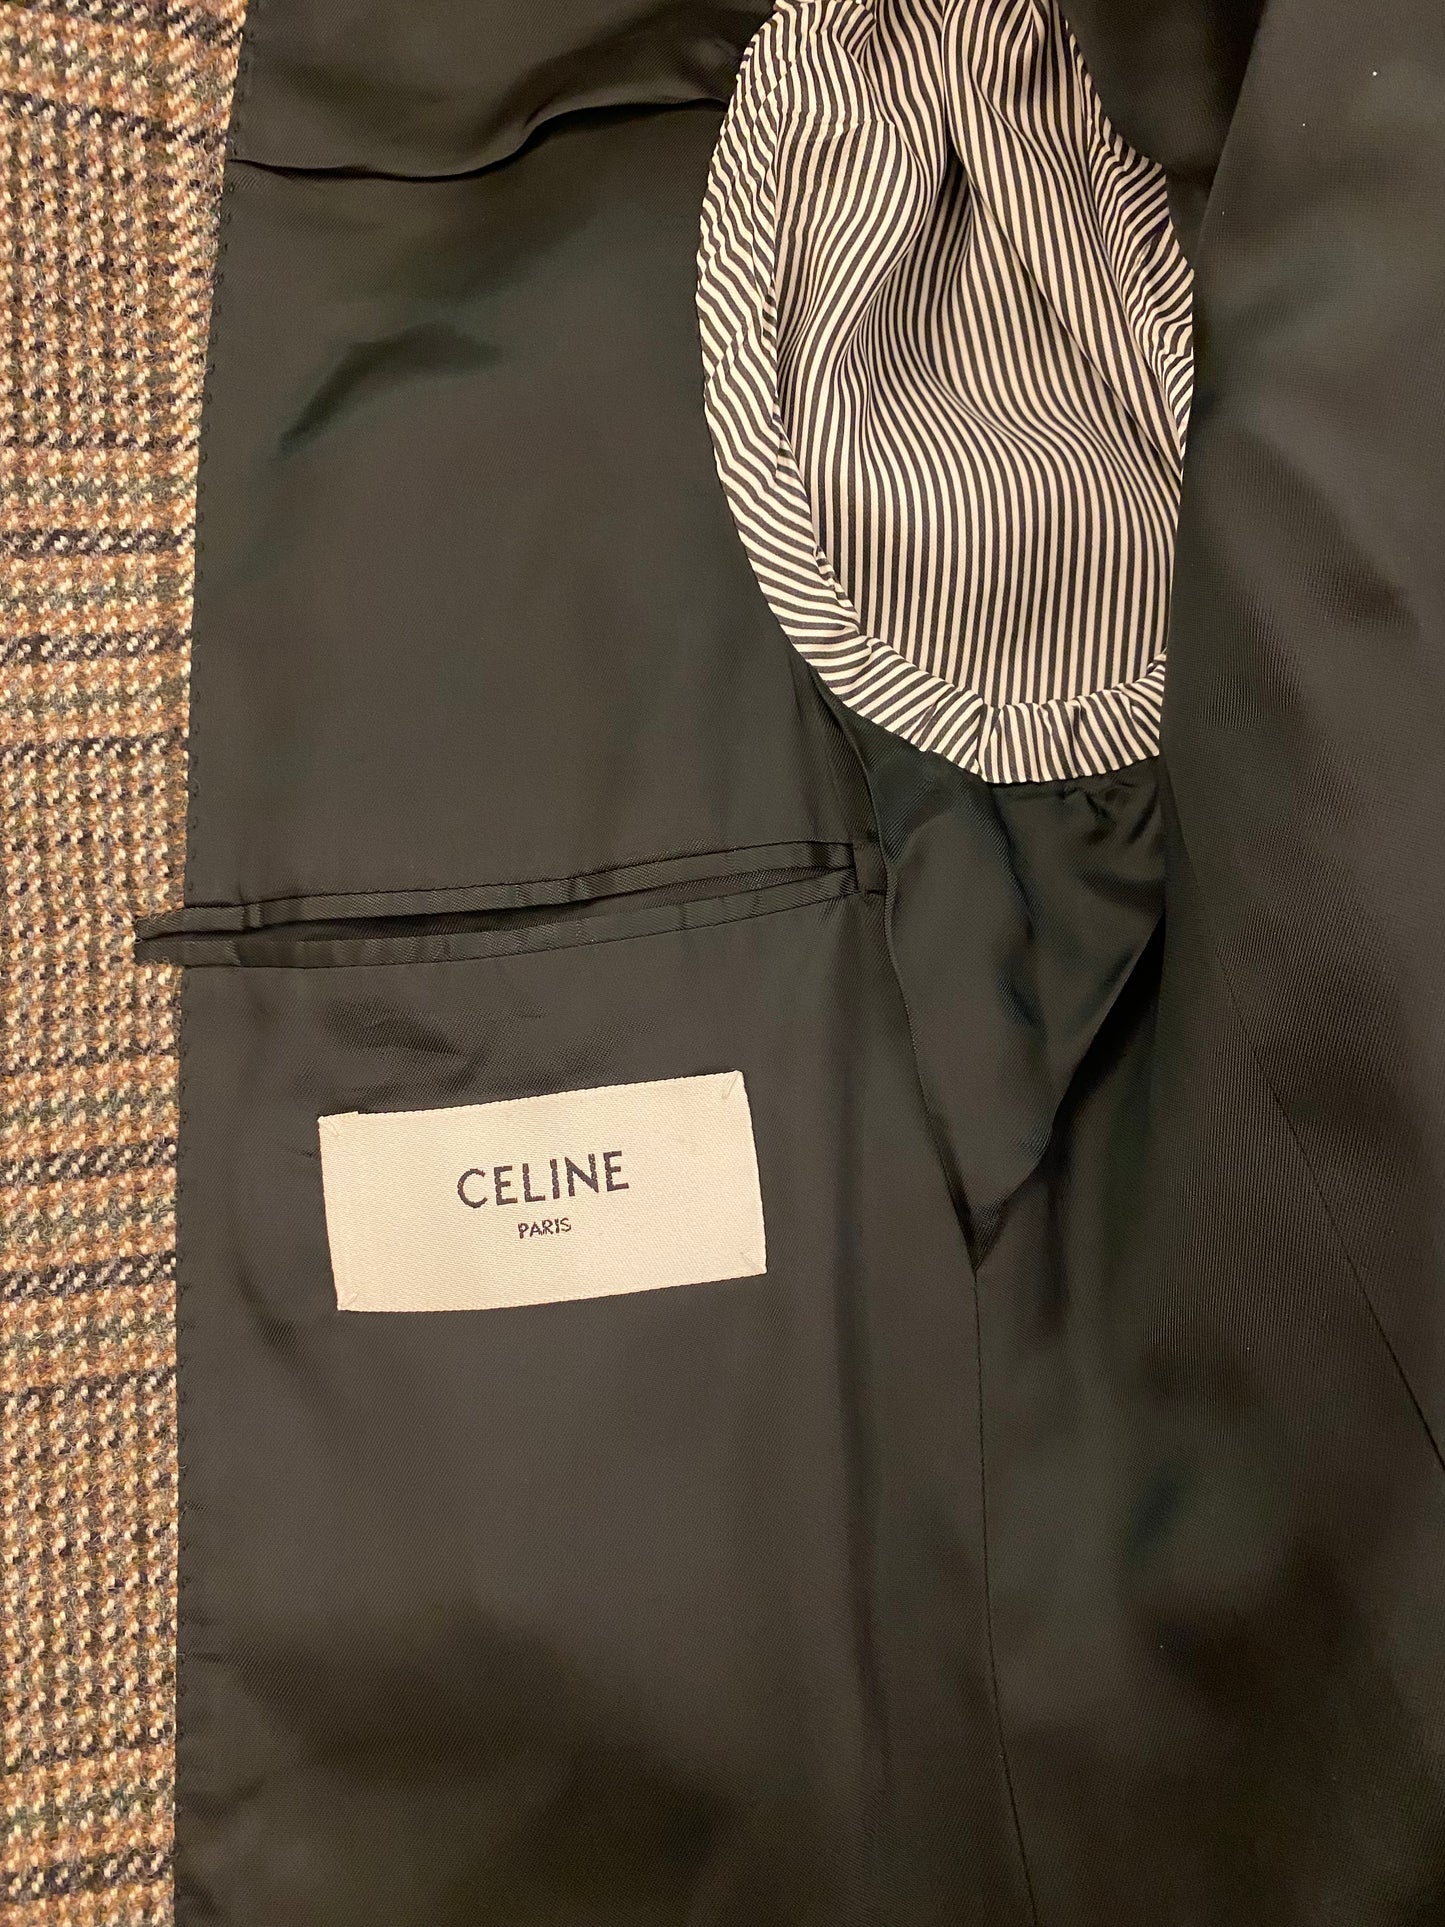 CÉLINE Check Wool Blazer Size 36